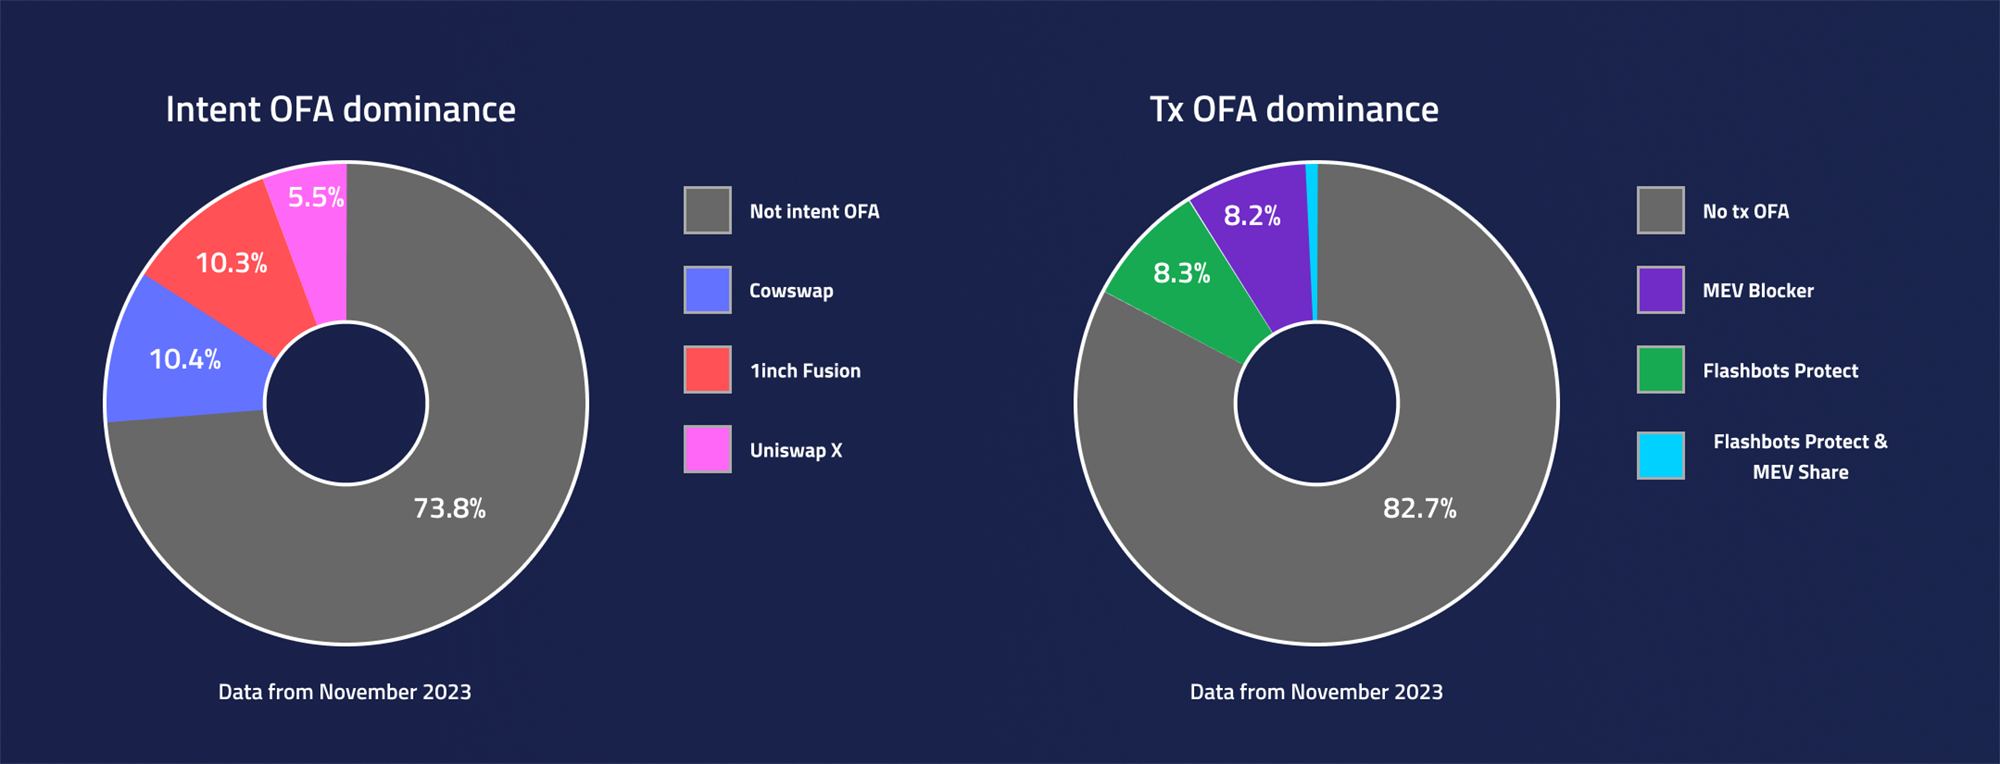 ofa-dominance-chart